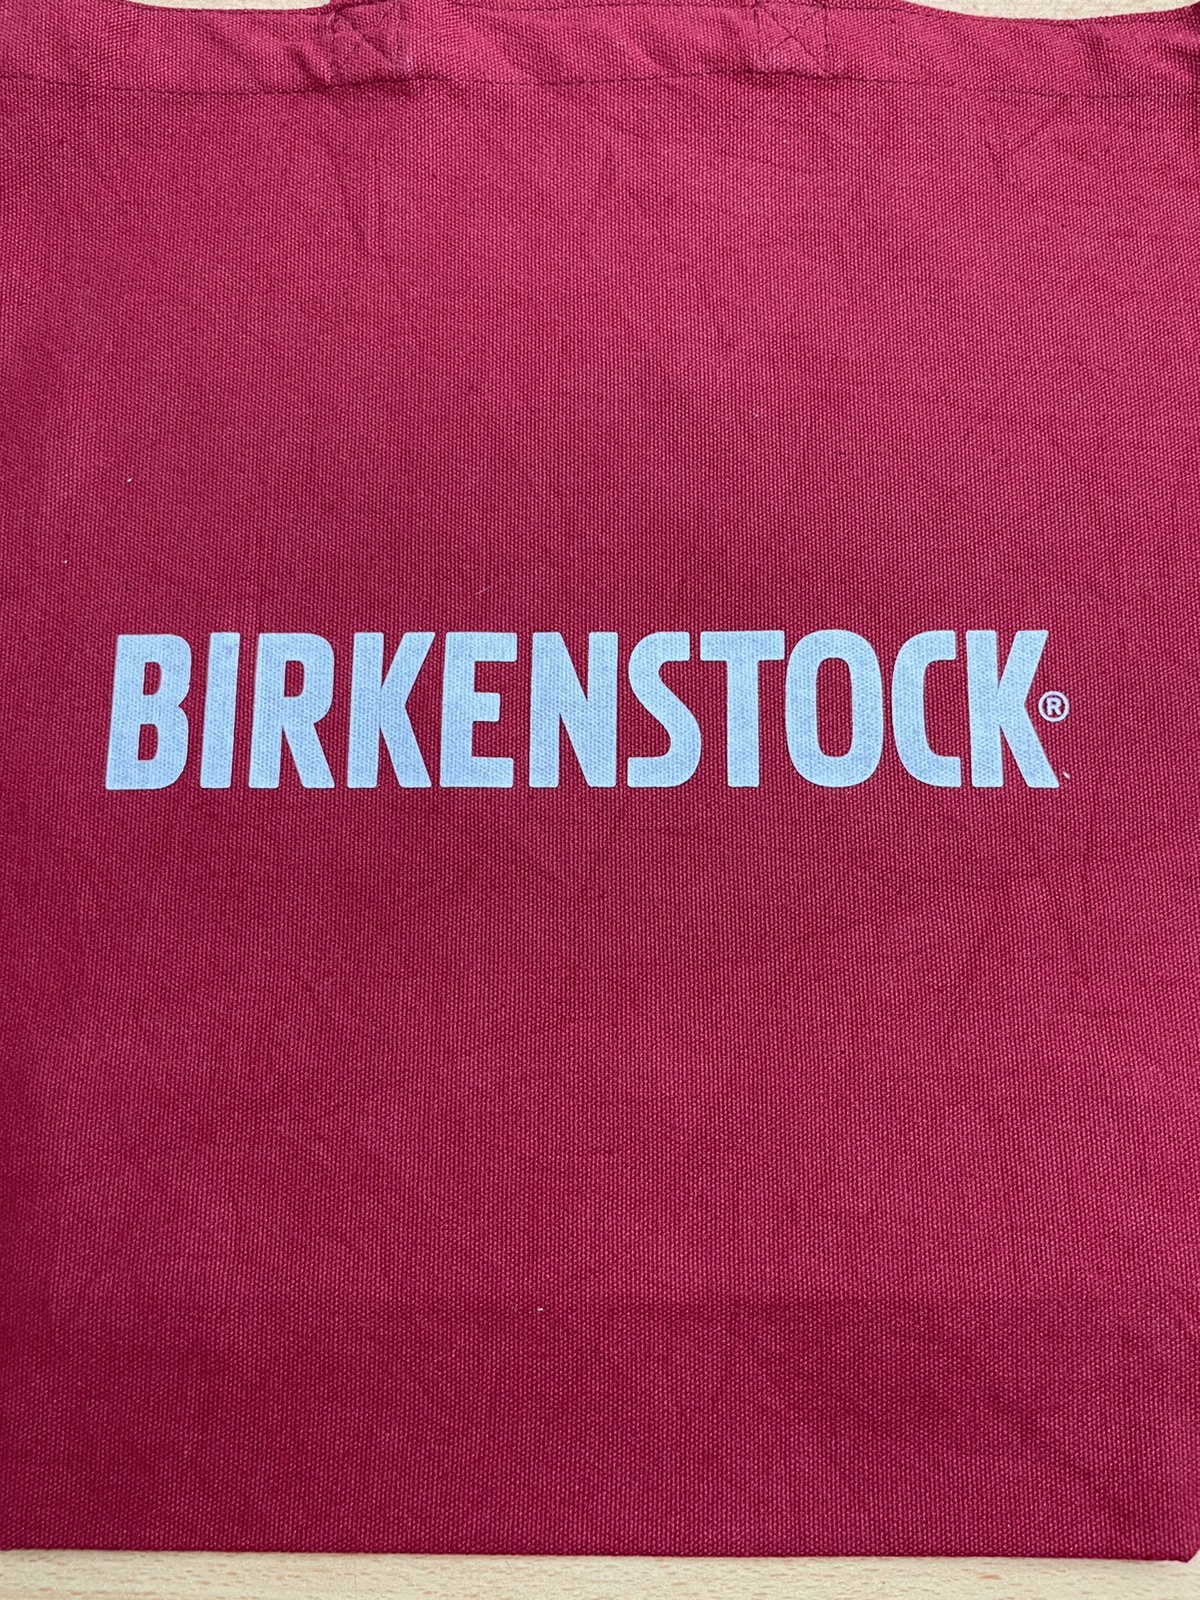 Birkenstock Tote Bag - 3